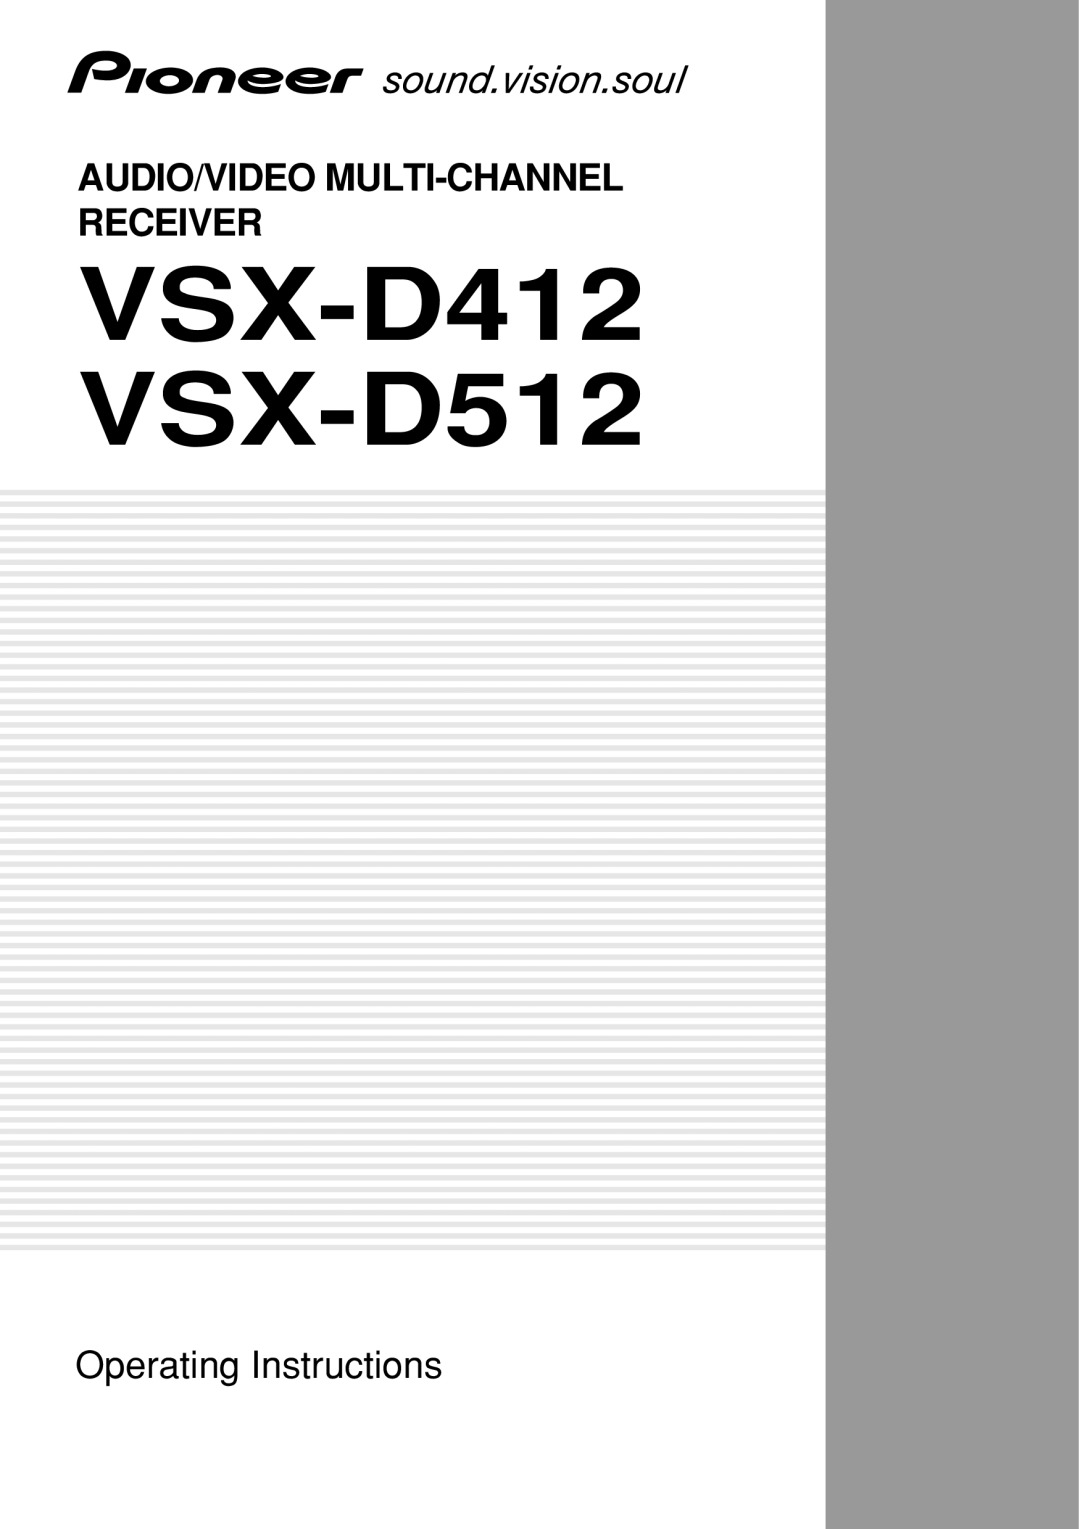 Pioneer vsx-d412 manual VSX-D412 VSX-D512, Audio/Video Multi-Channelreceiver, Operating Instructions 